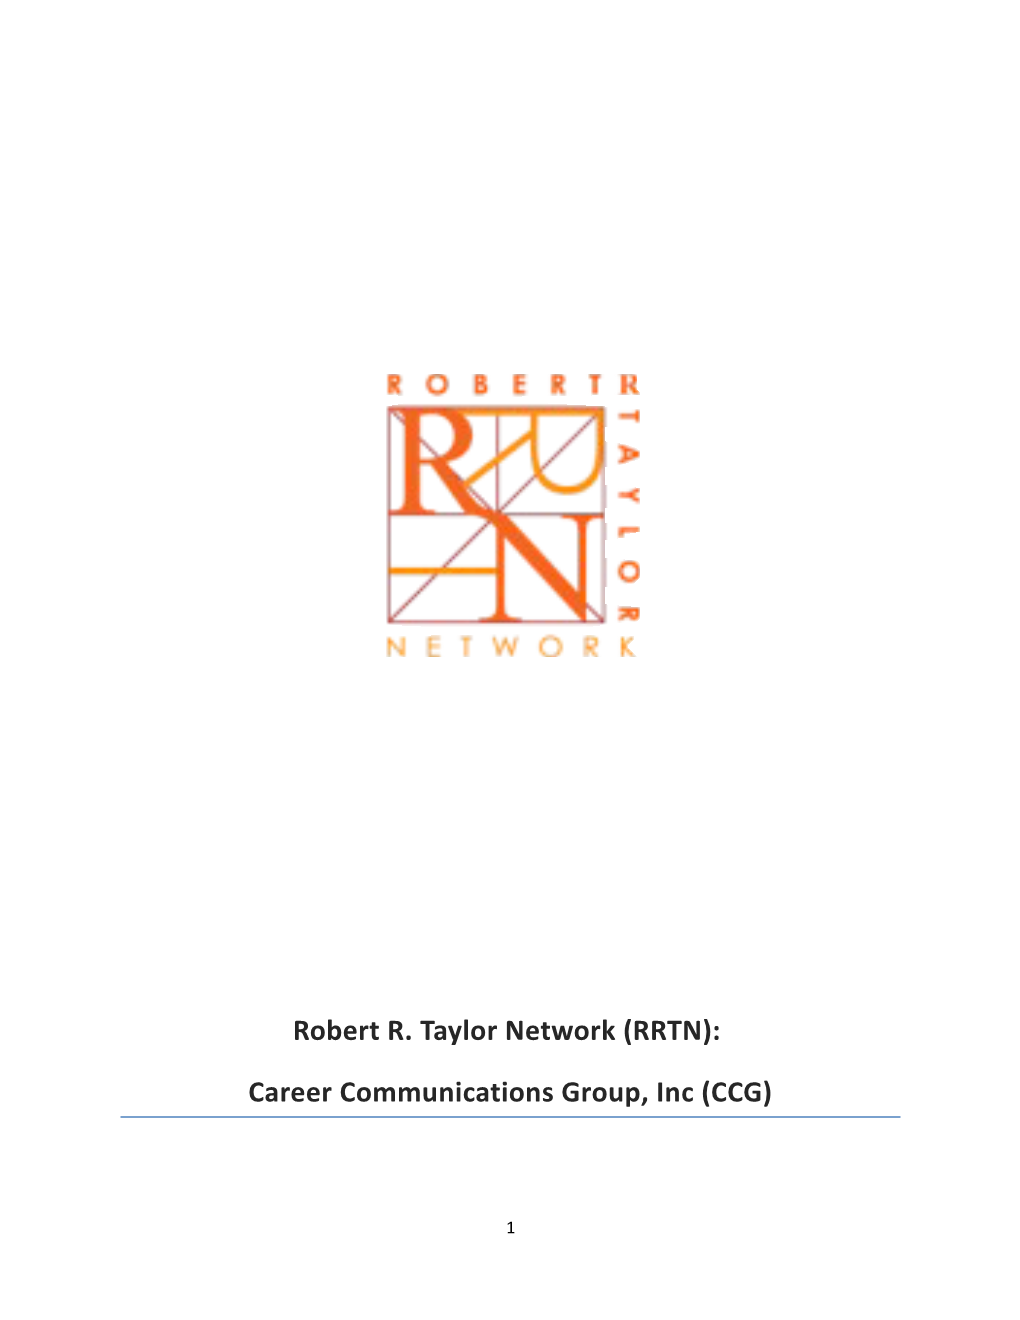 Robert R. Taylor Network (RRTN)